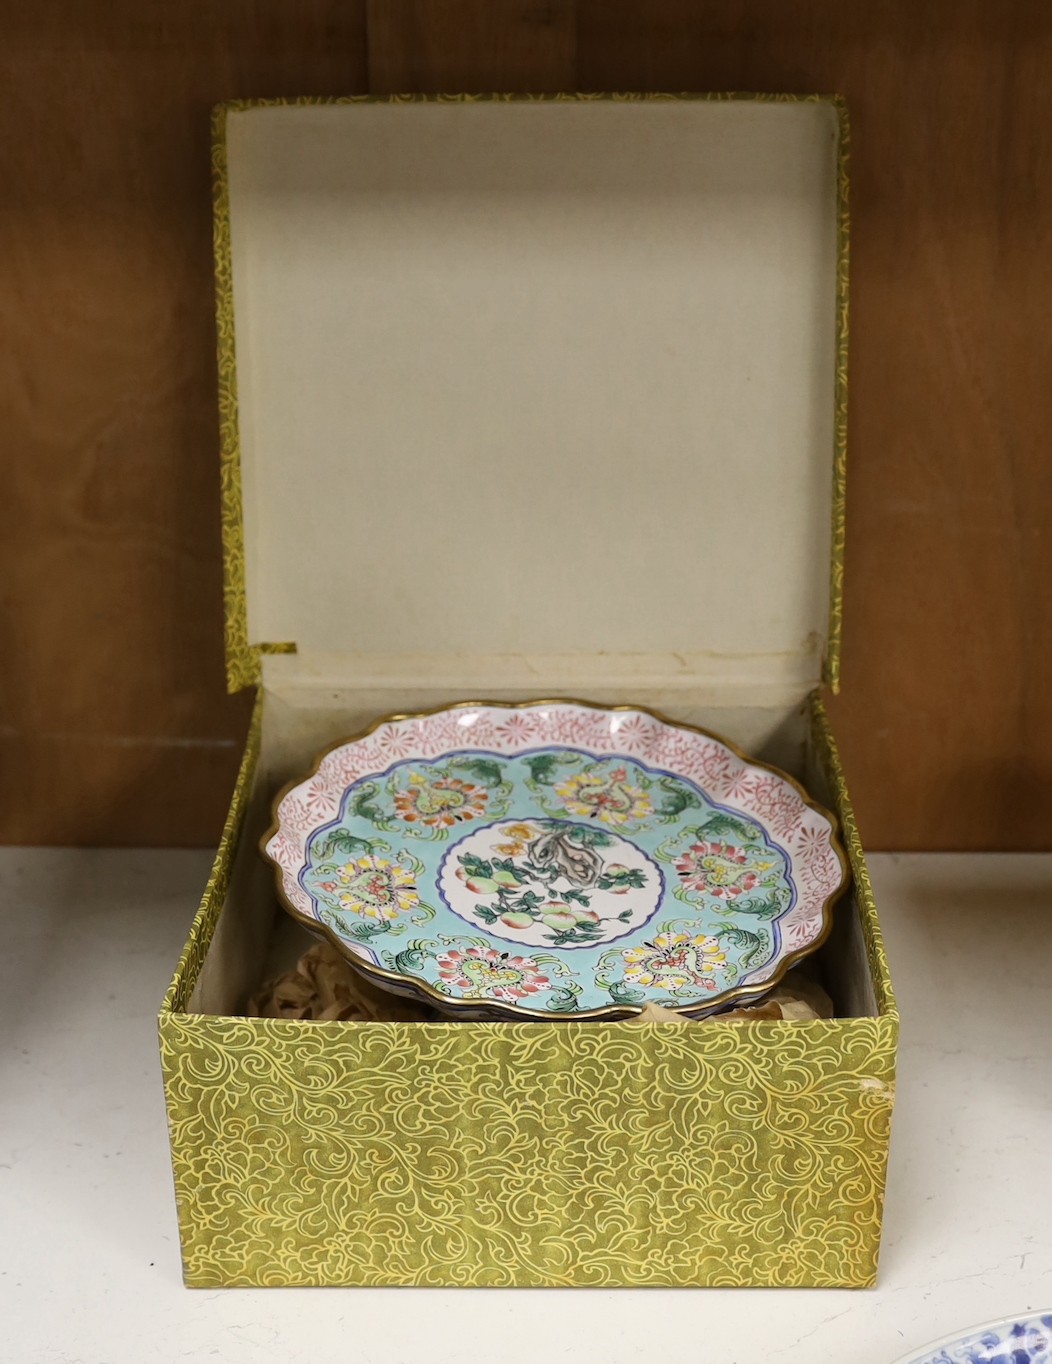 A boxed Chinese Guangzhou enamel comport, 21cm diameter